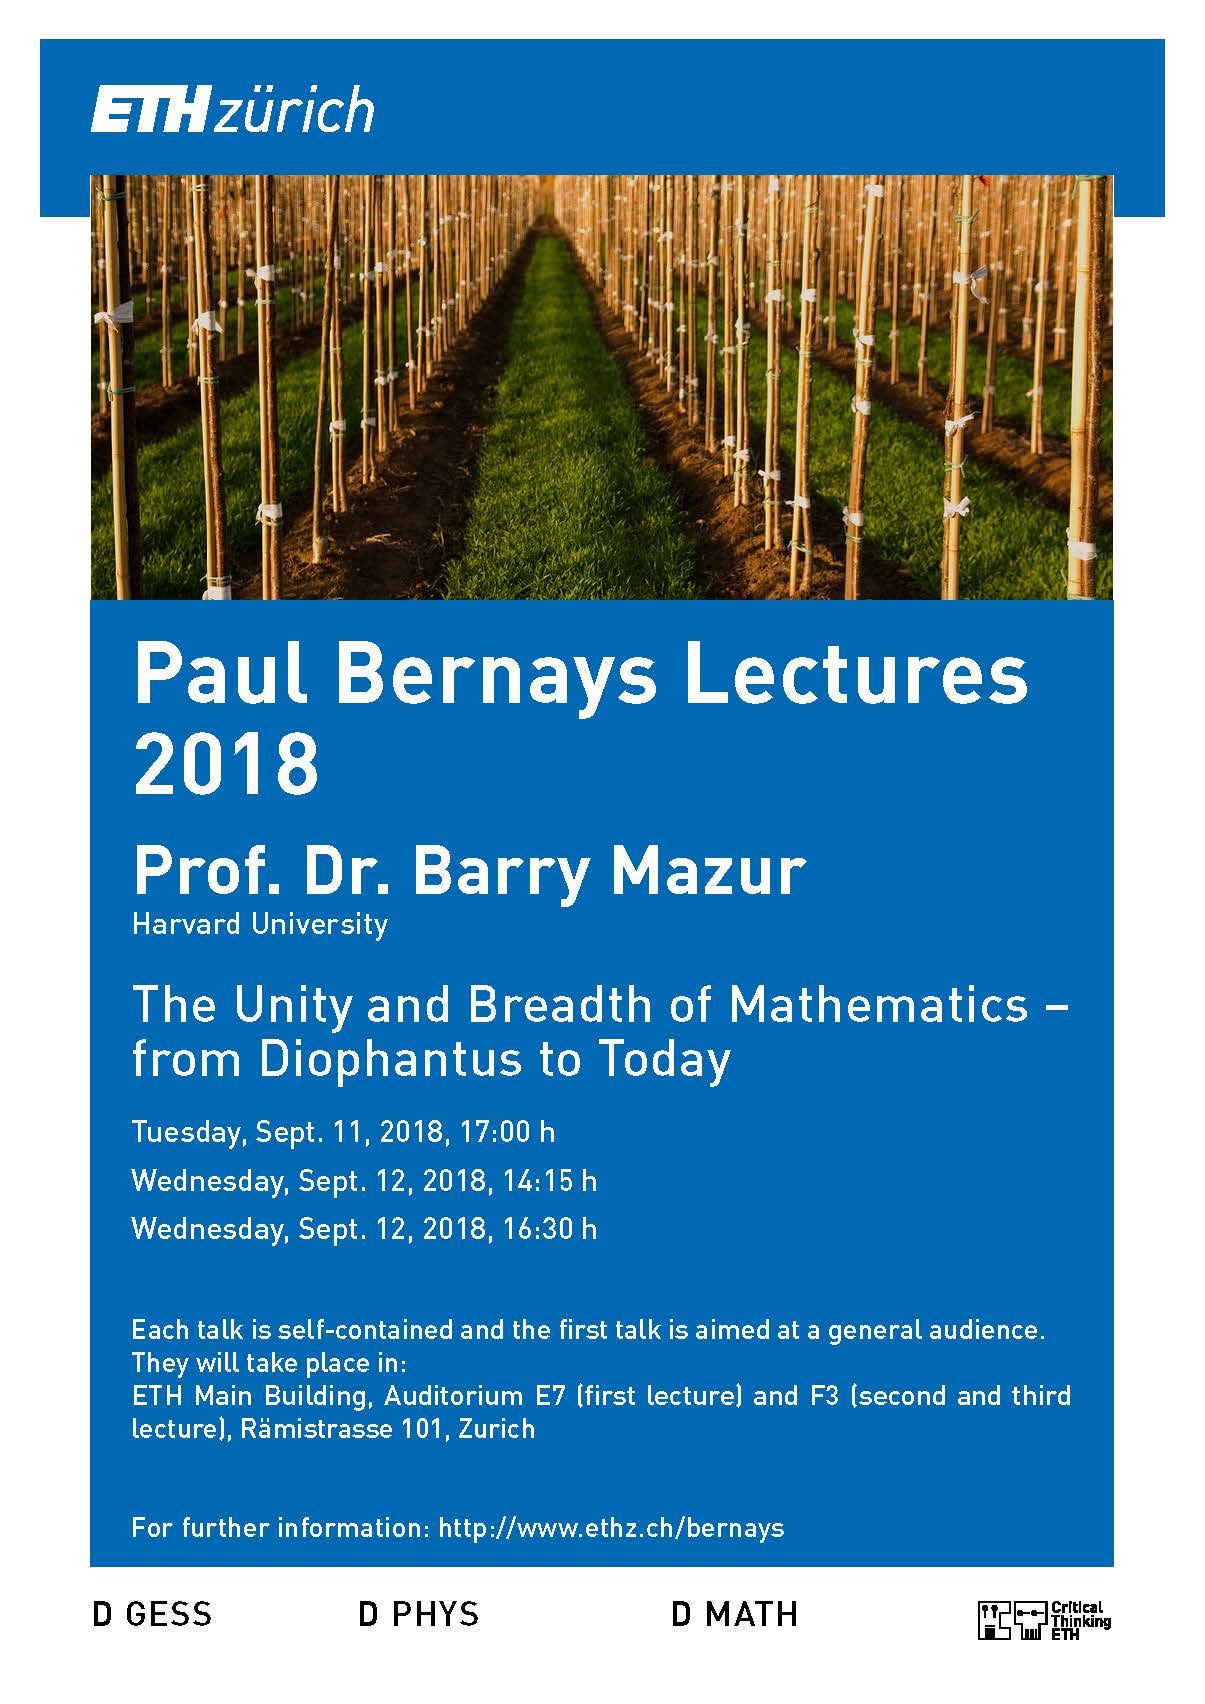 Vergrösserte Ansicht: Poster Paul Bernays Lectures 2018 